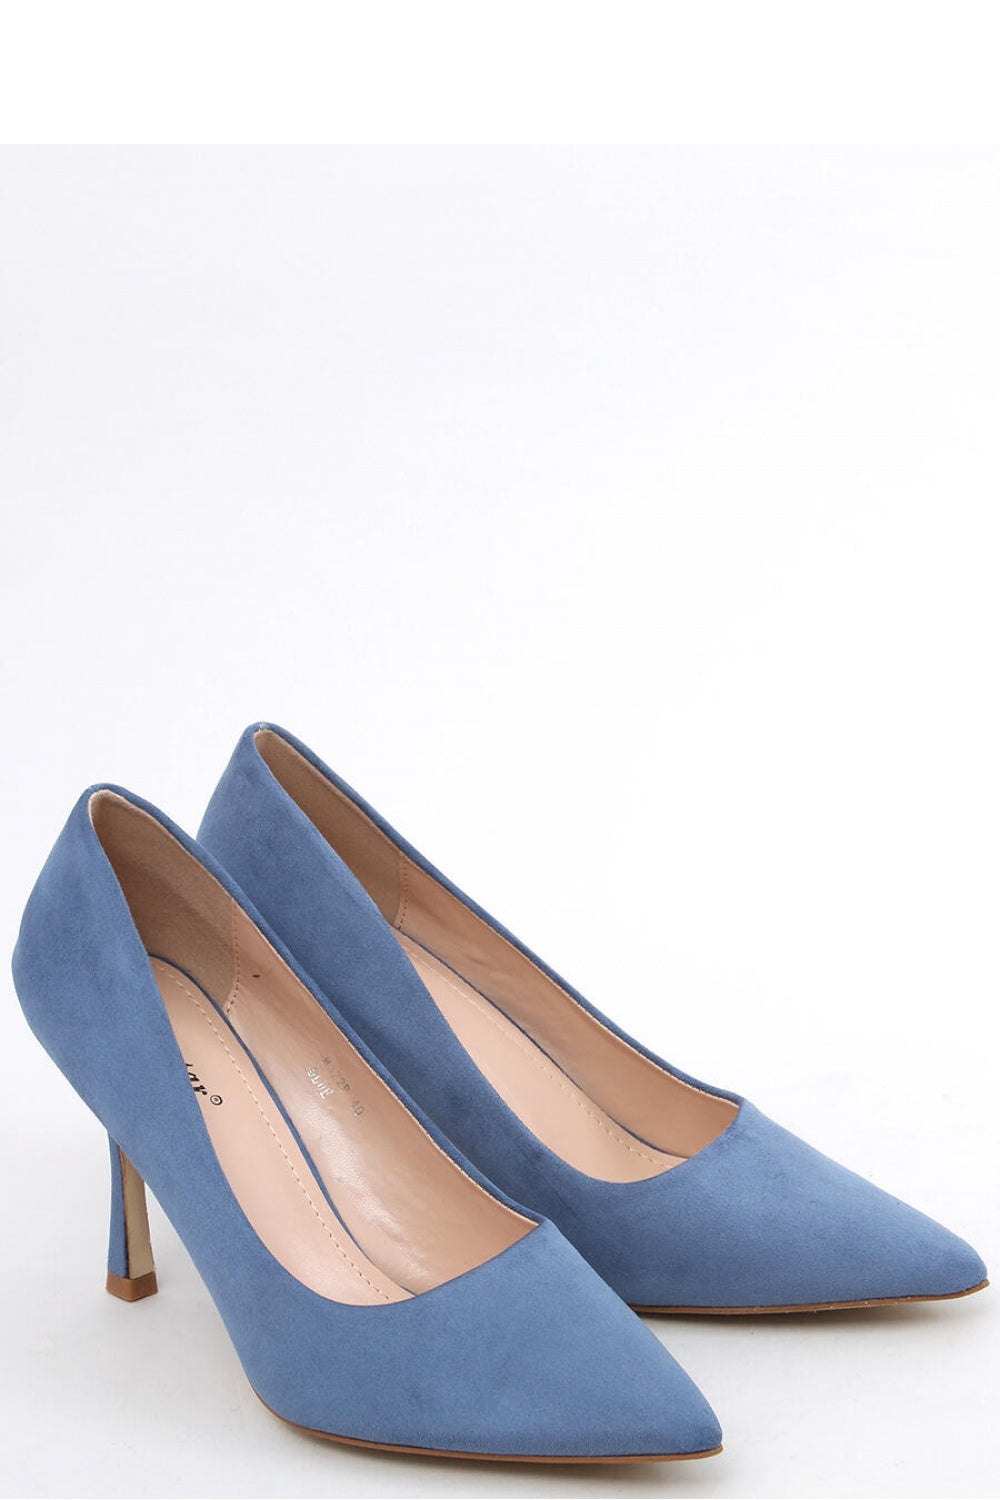 High heels model 163946 Inello Posh Styles Apparel